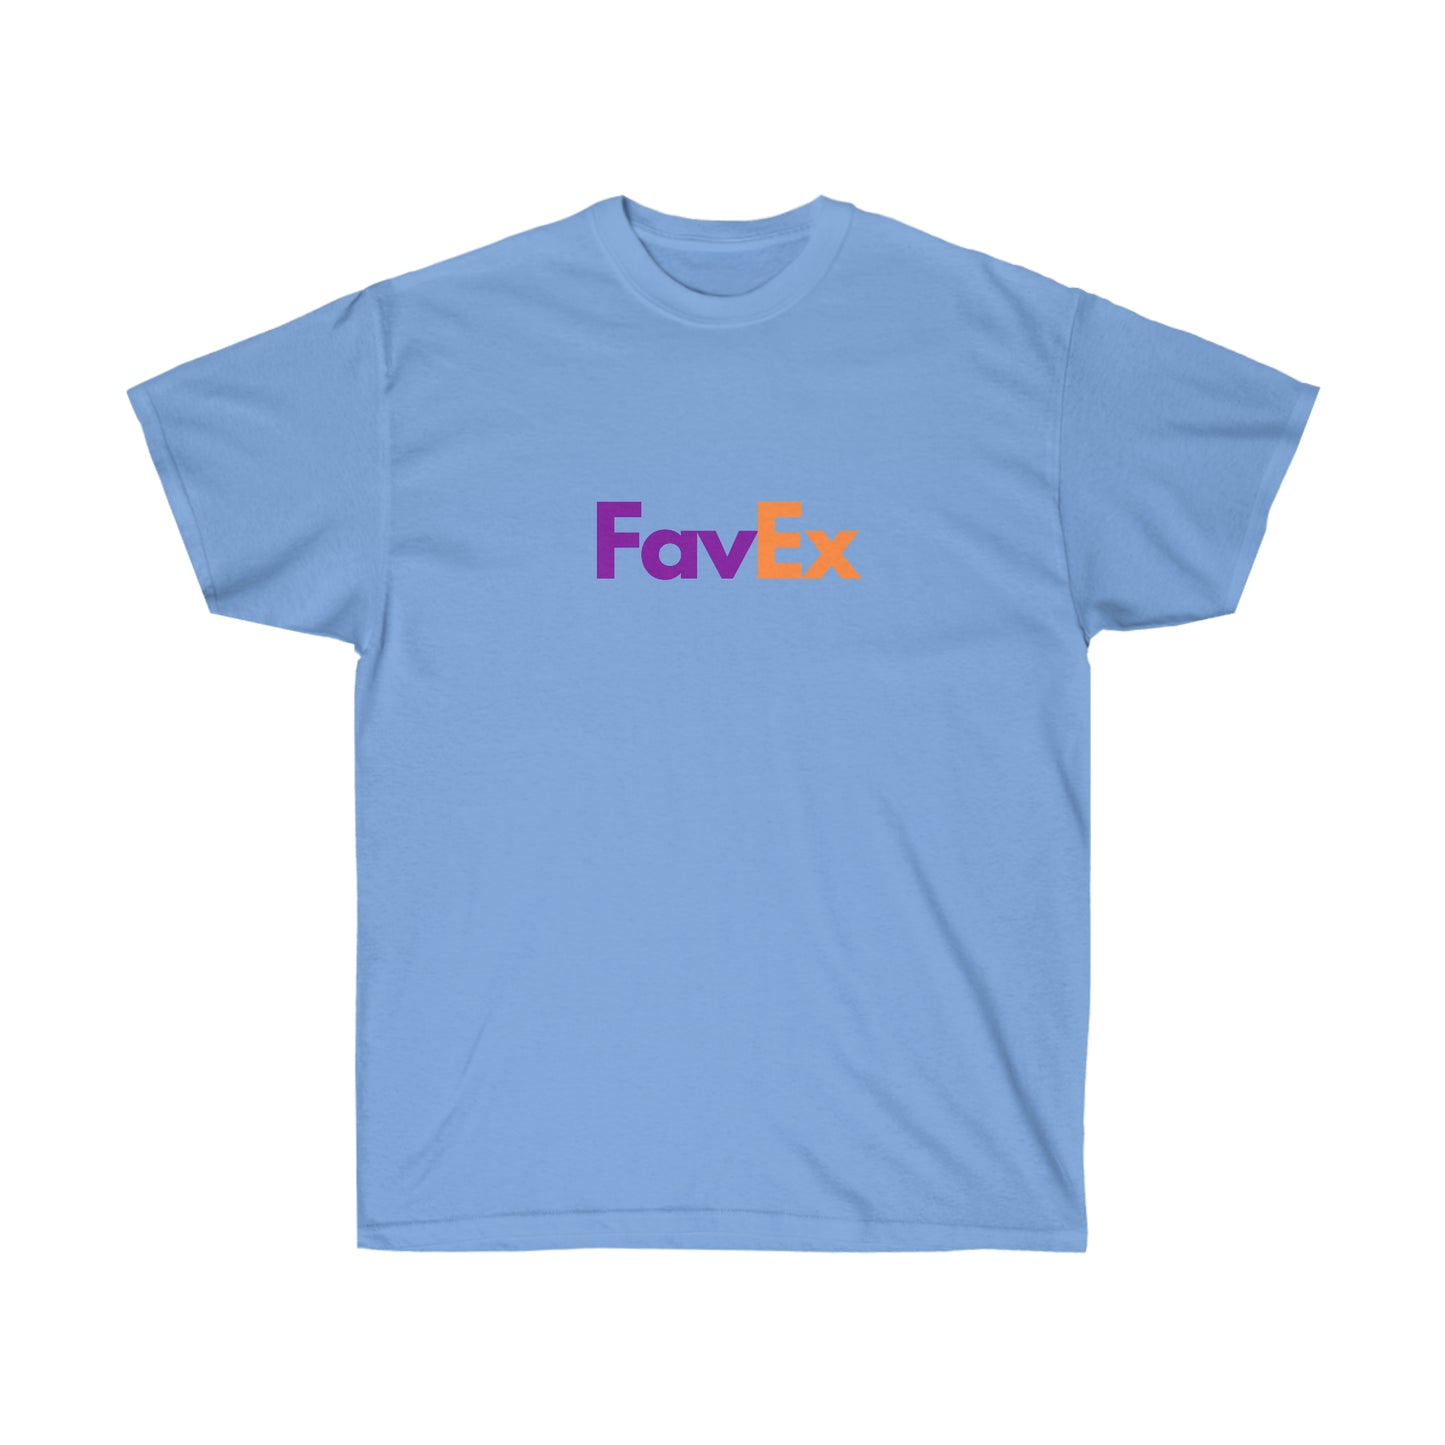 FavEx | Tee